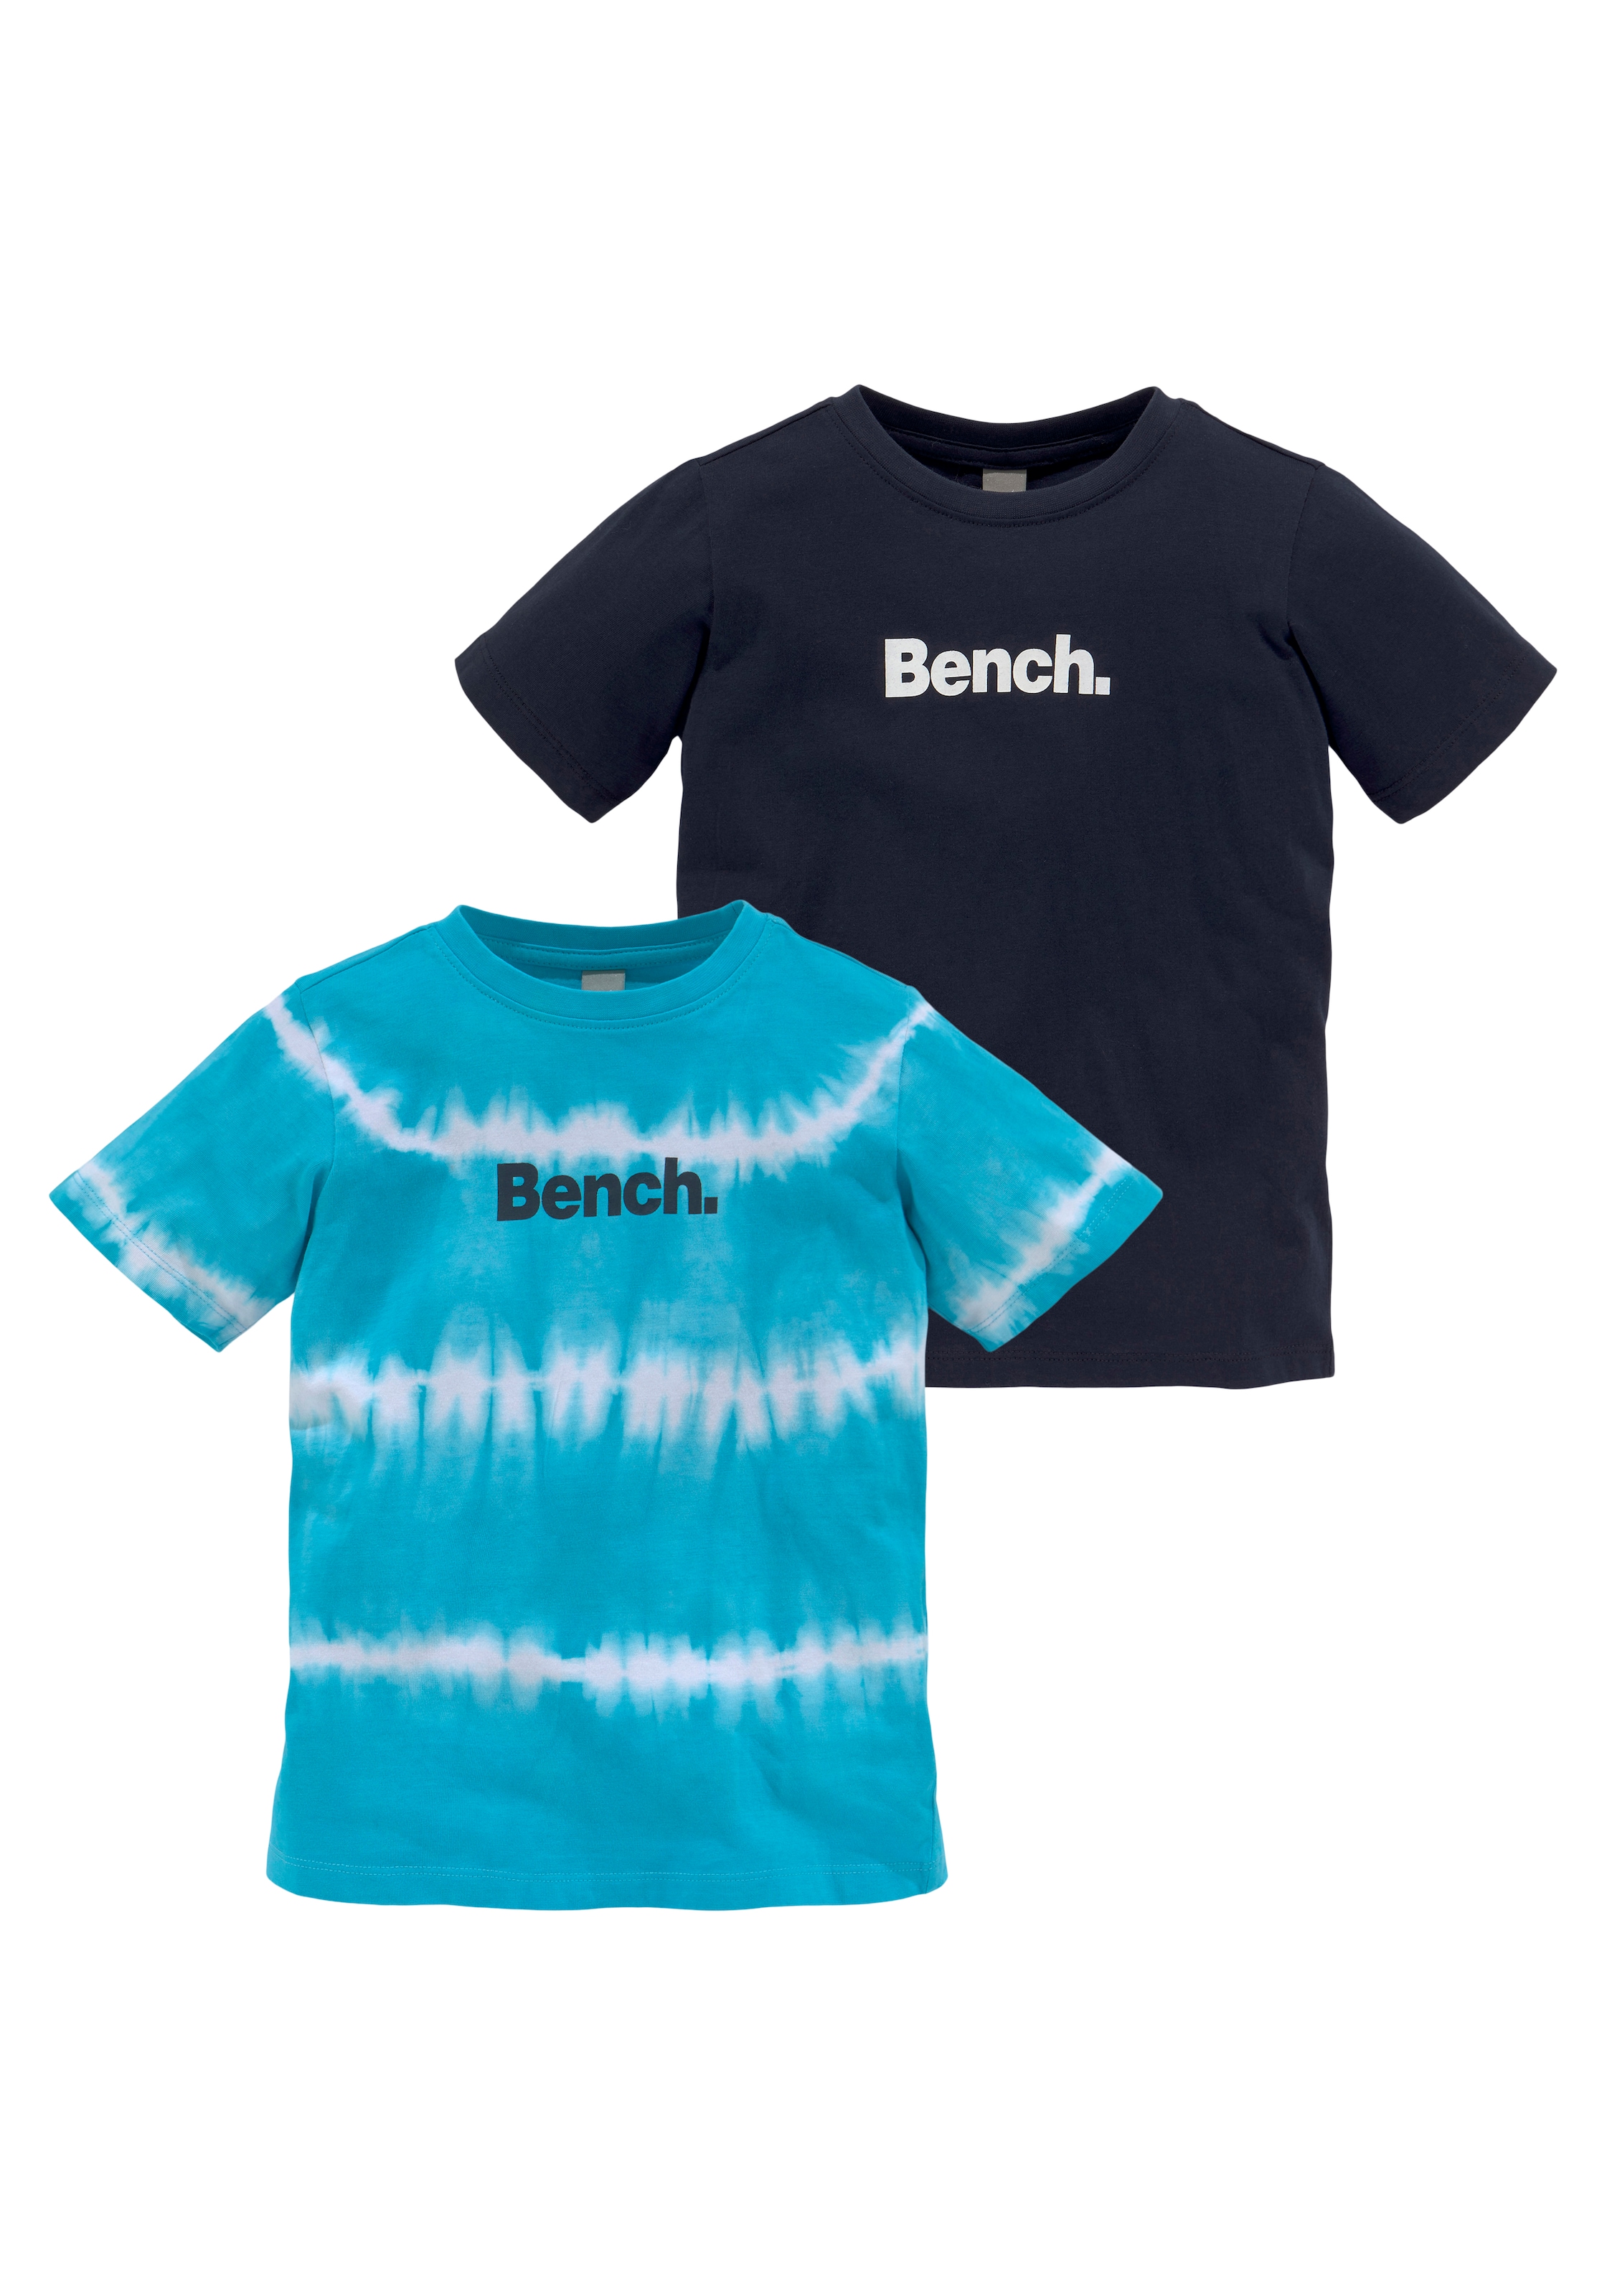 T-Shirt, tlg., Bench. shoppen ohne - Trendige versandkostenfrei (Packung, 2 Batikoptik 2er-Pack), Mindestbestellwert in toller